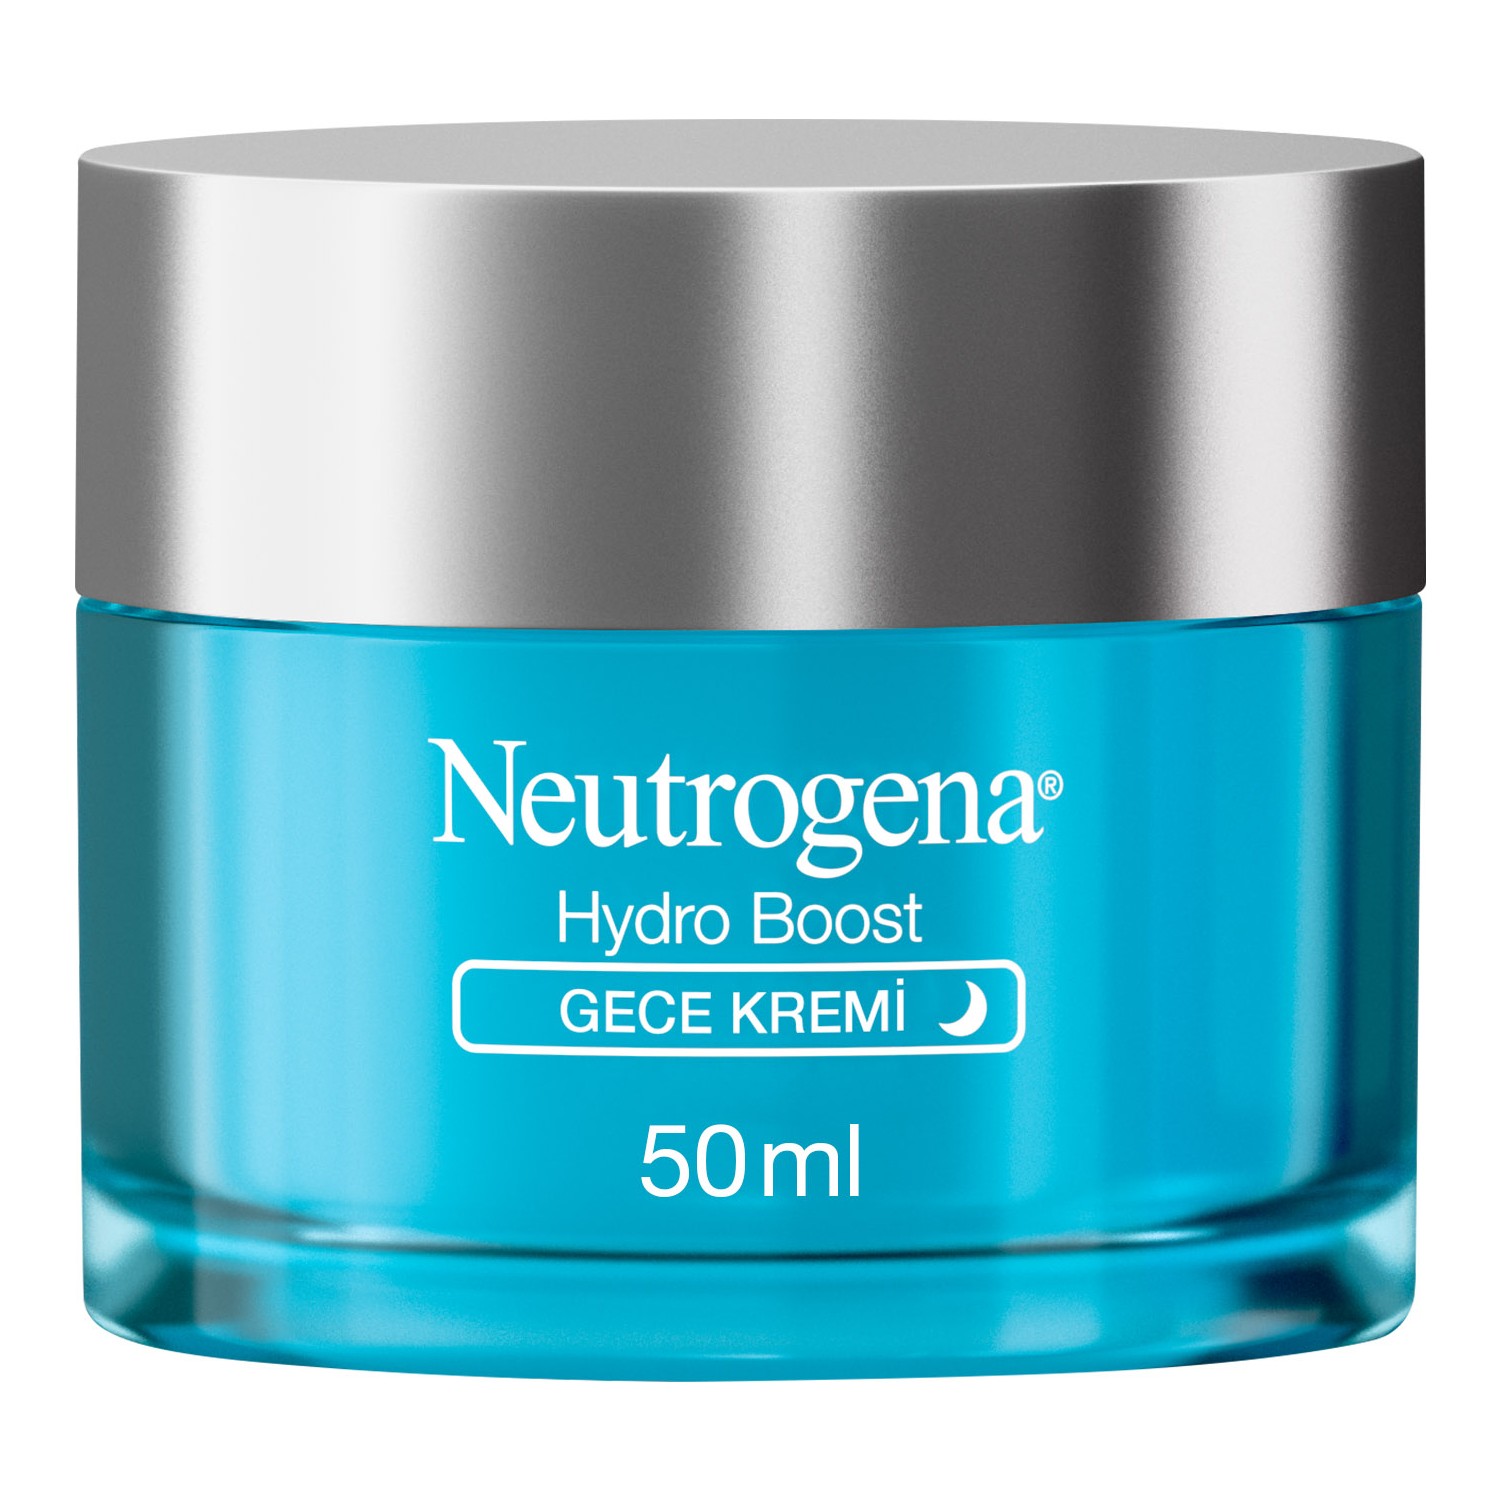 Ночной крем Neutrogena Hydro Boost, 50 мл крем увлажняющий neutrogena hydro boost water gel для нормальной кожи 2 упаковки по 50 мл